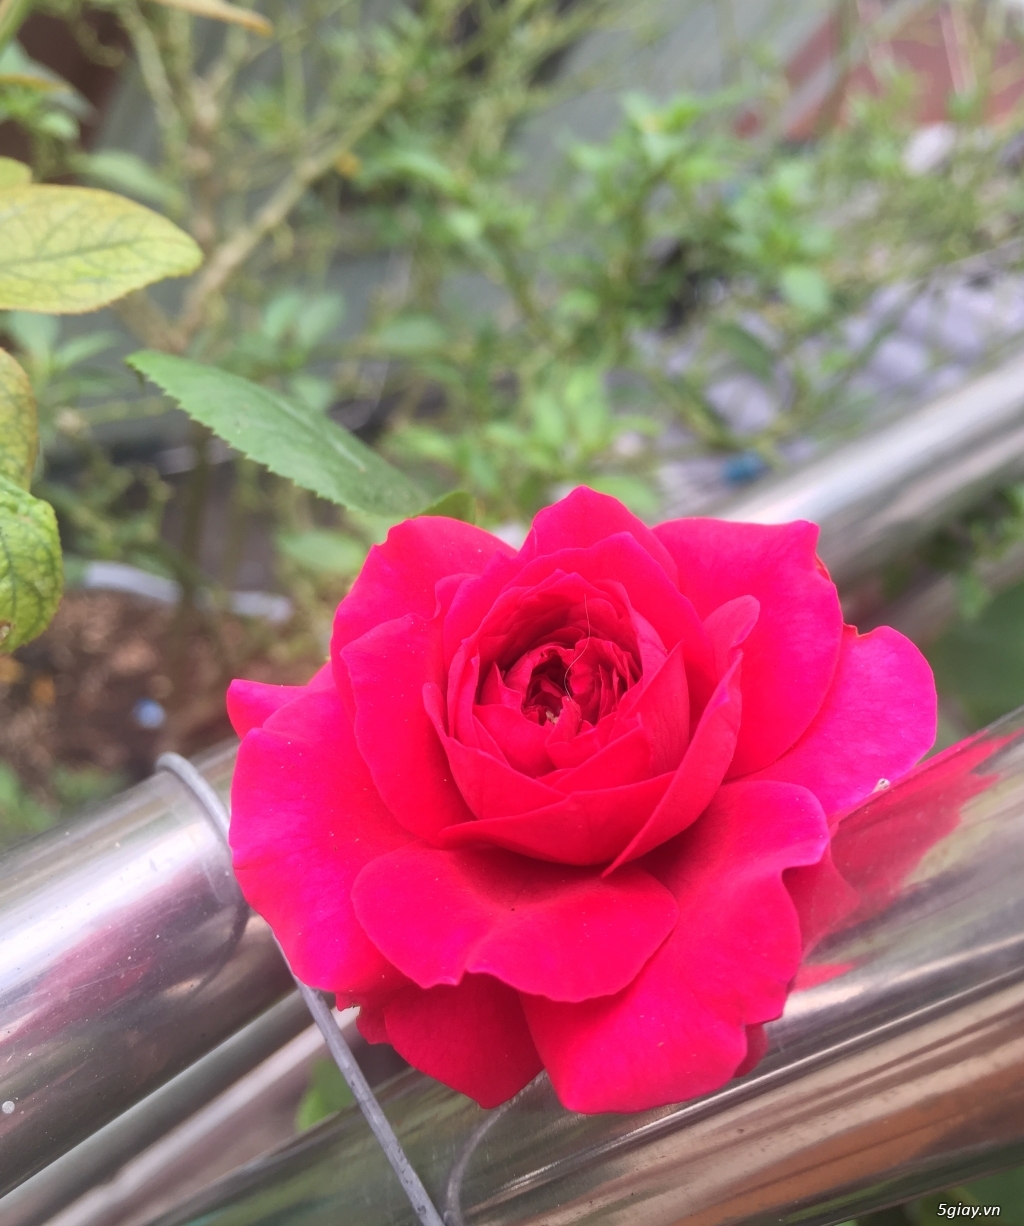 Thanh cây hoa hồng Red Eden cao 2m - 1